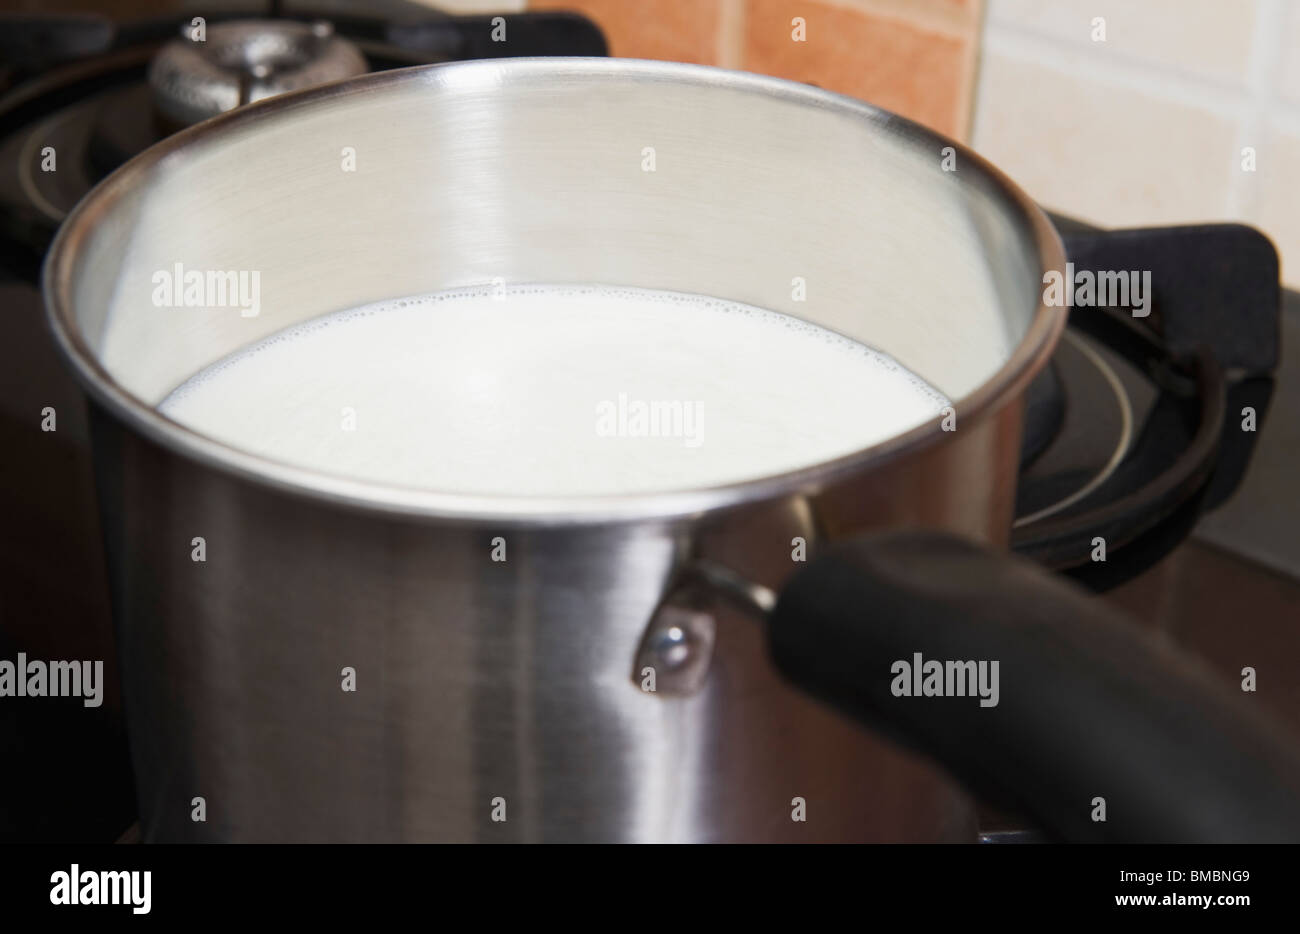 Milk in a saucepan on a gas stove burner Stock Photo - Alamy